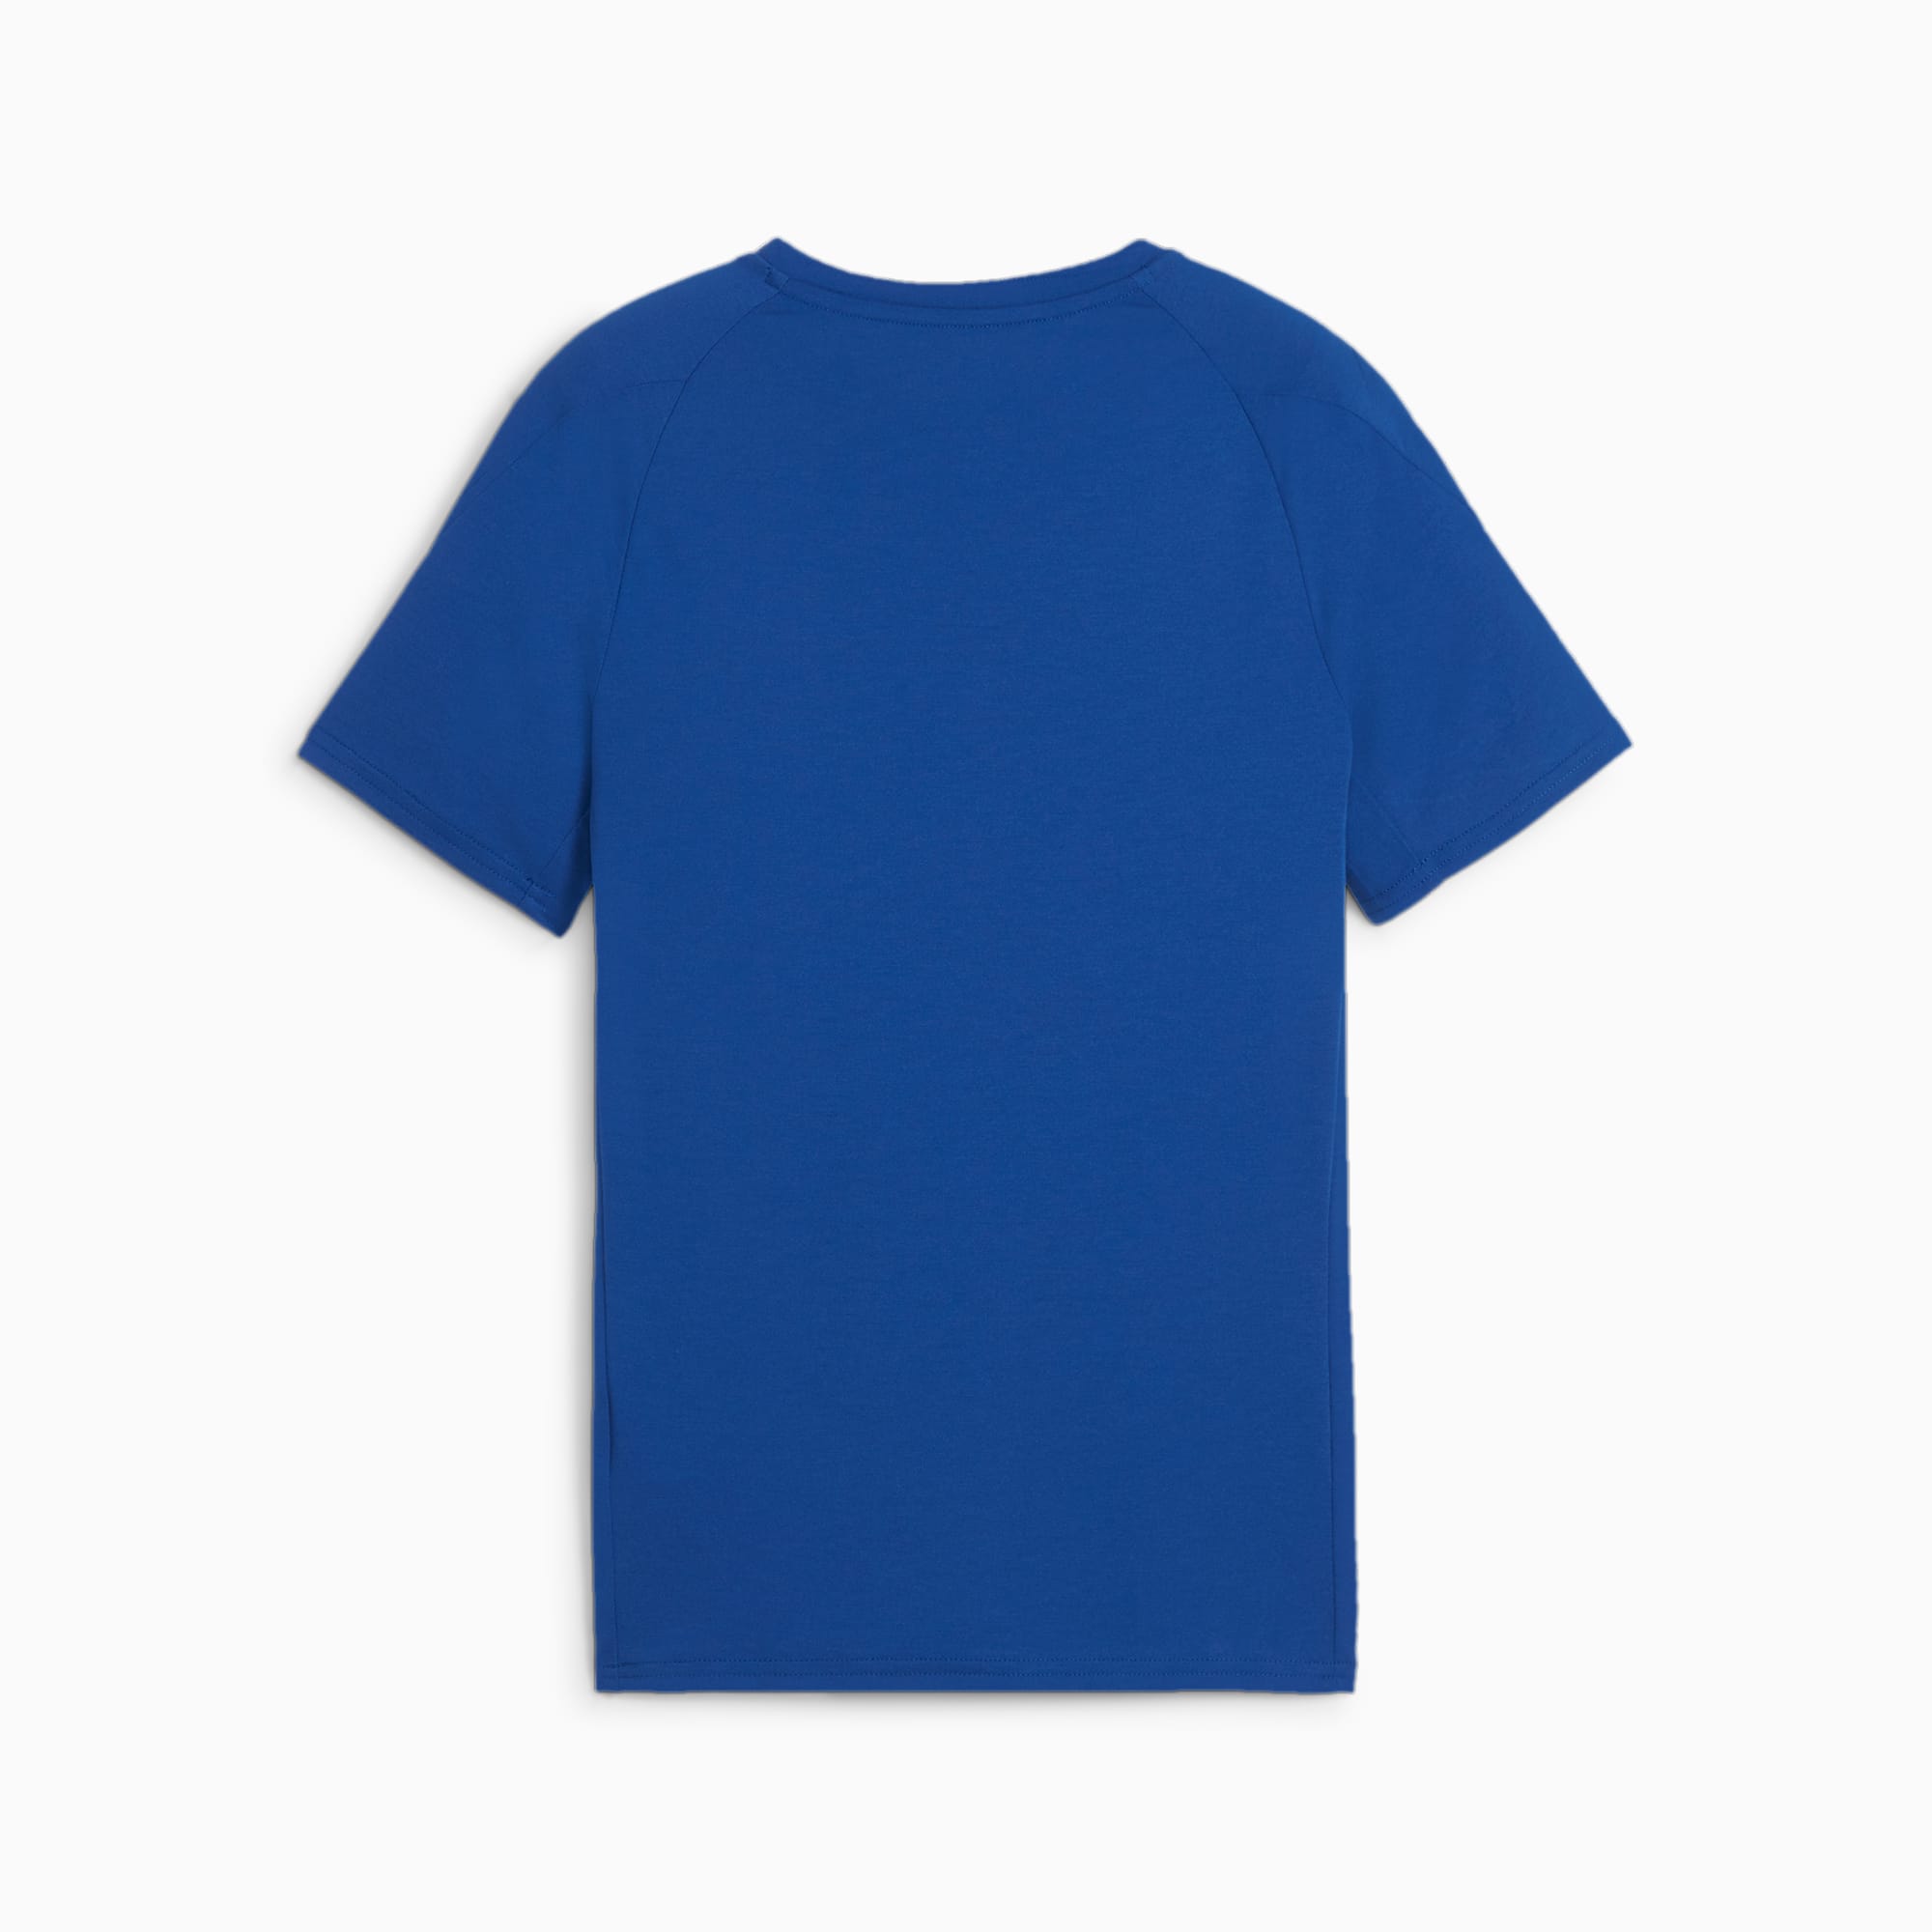 PUMA Evostripe Youth T-Shirt, Cobalt Glaze, Size 116, Clothing